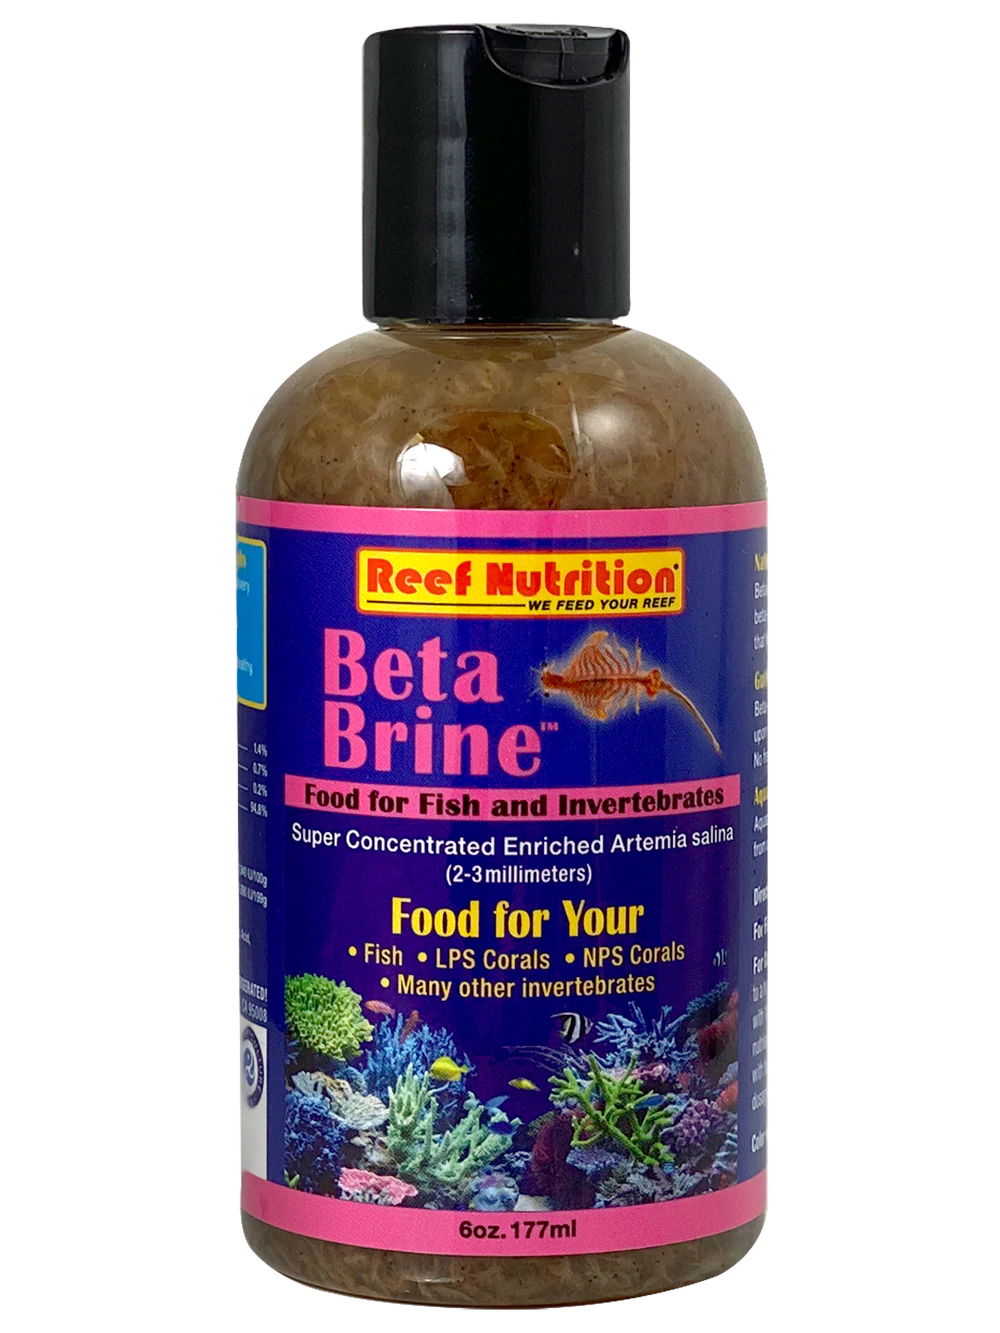 Beta Brine Refrigerated